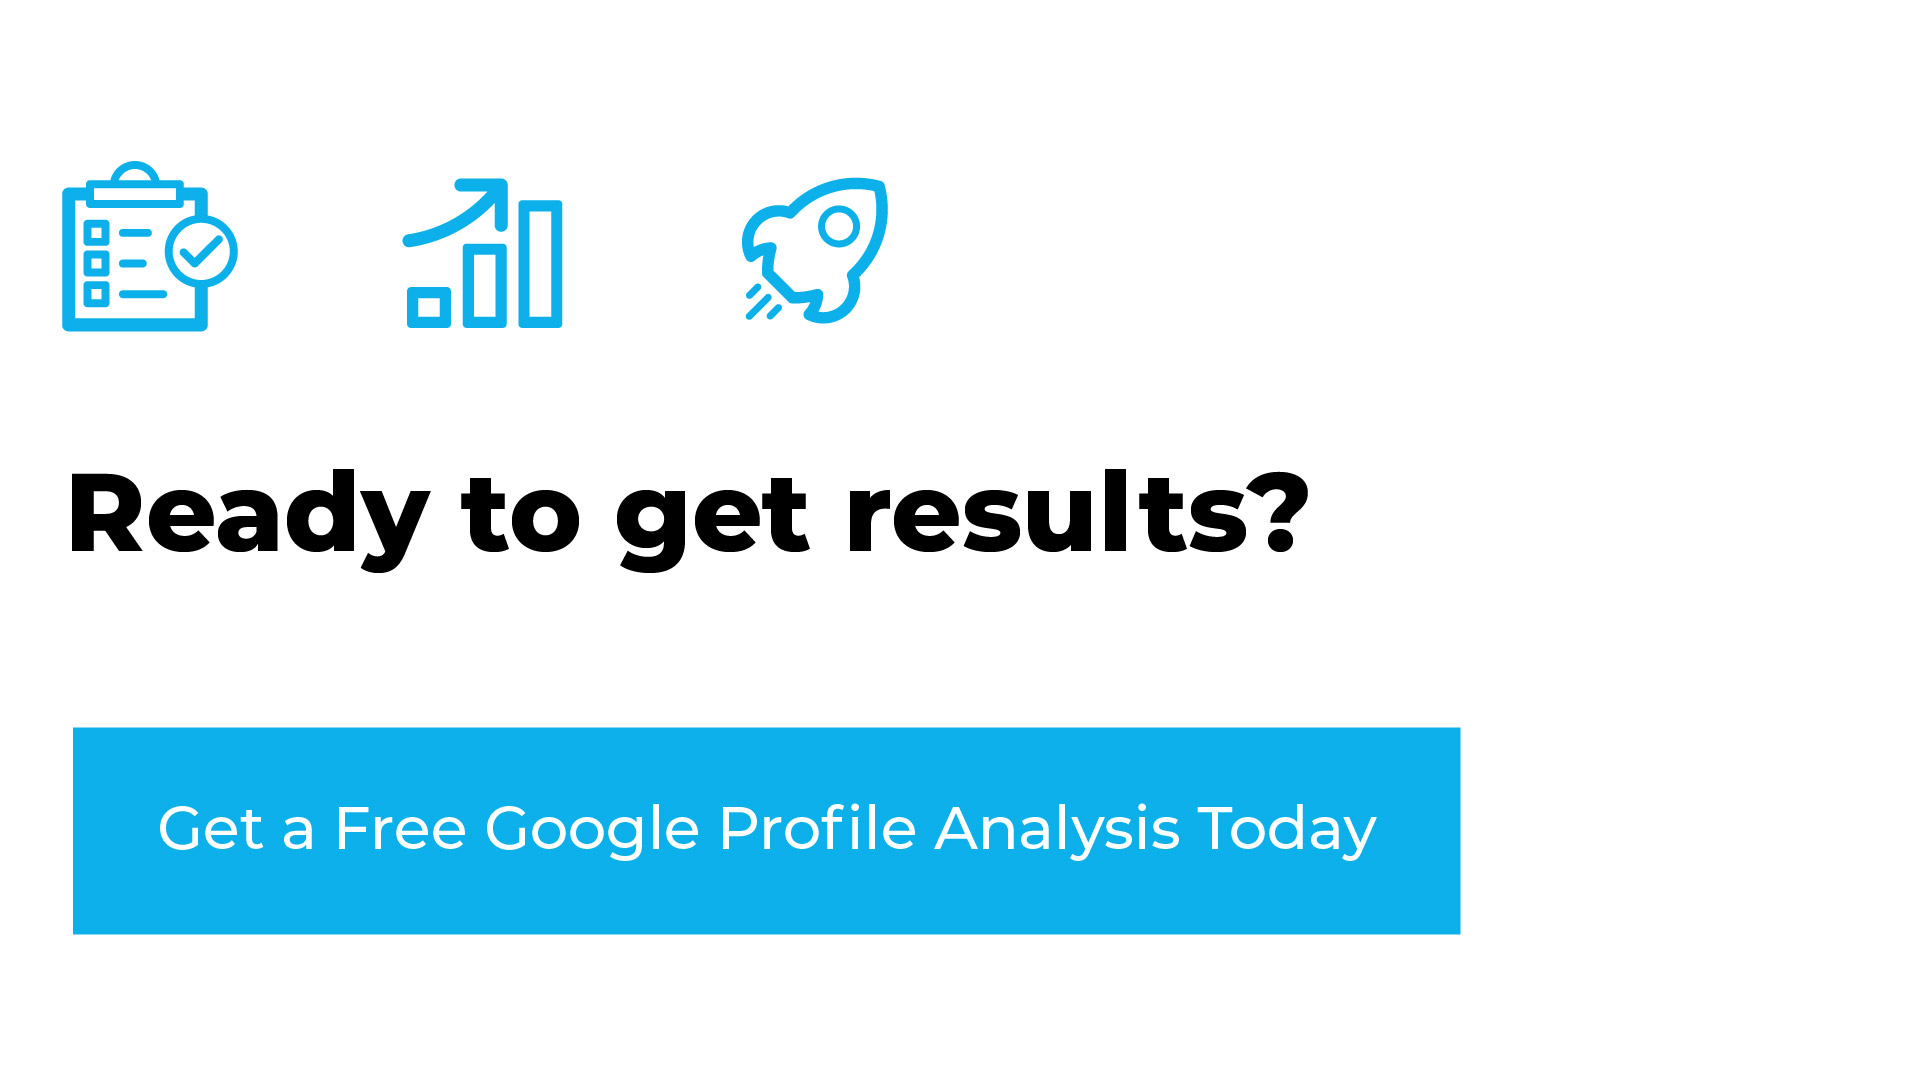 Claim your Free Google Profile Analysis Today